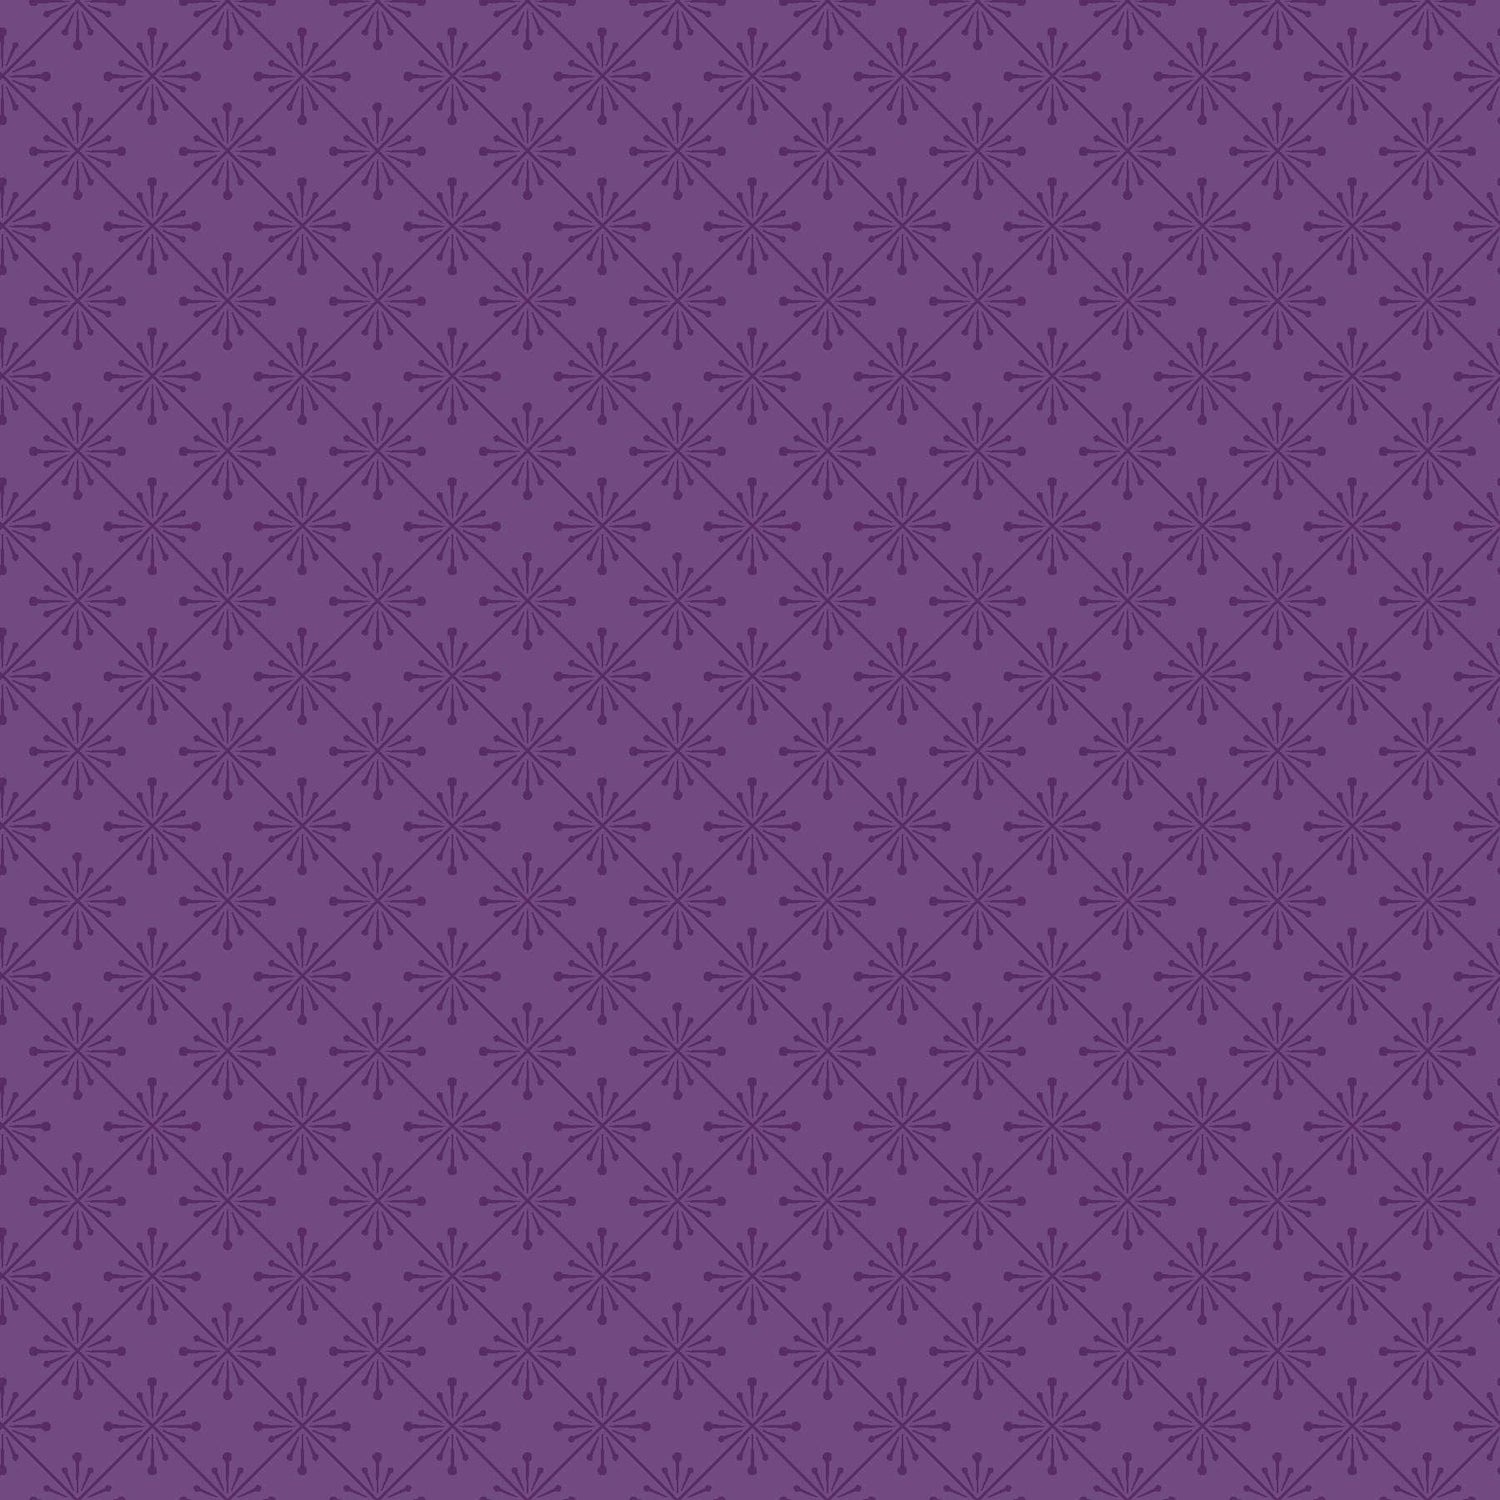 Sparkle Dark Violet by Kim Christopherson of Kimberbell Designs for Maywood Studios - MAS8257-V